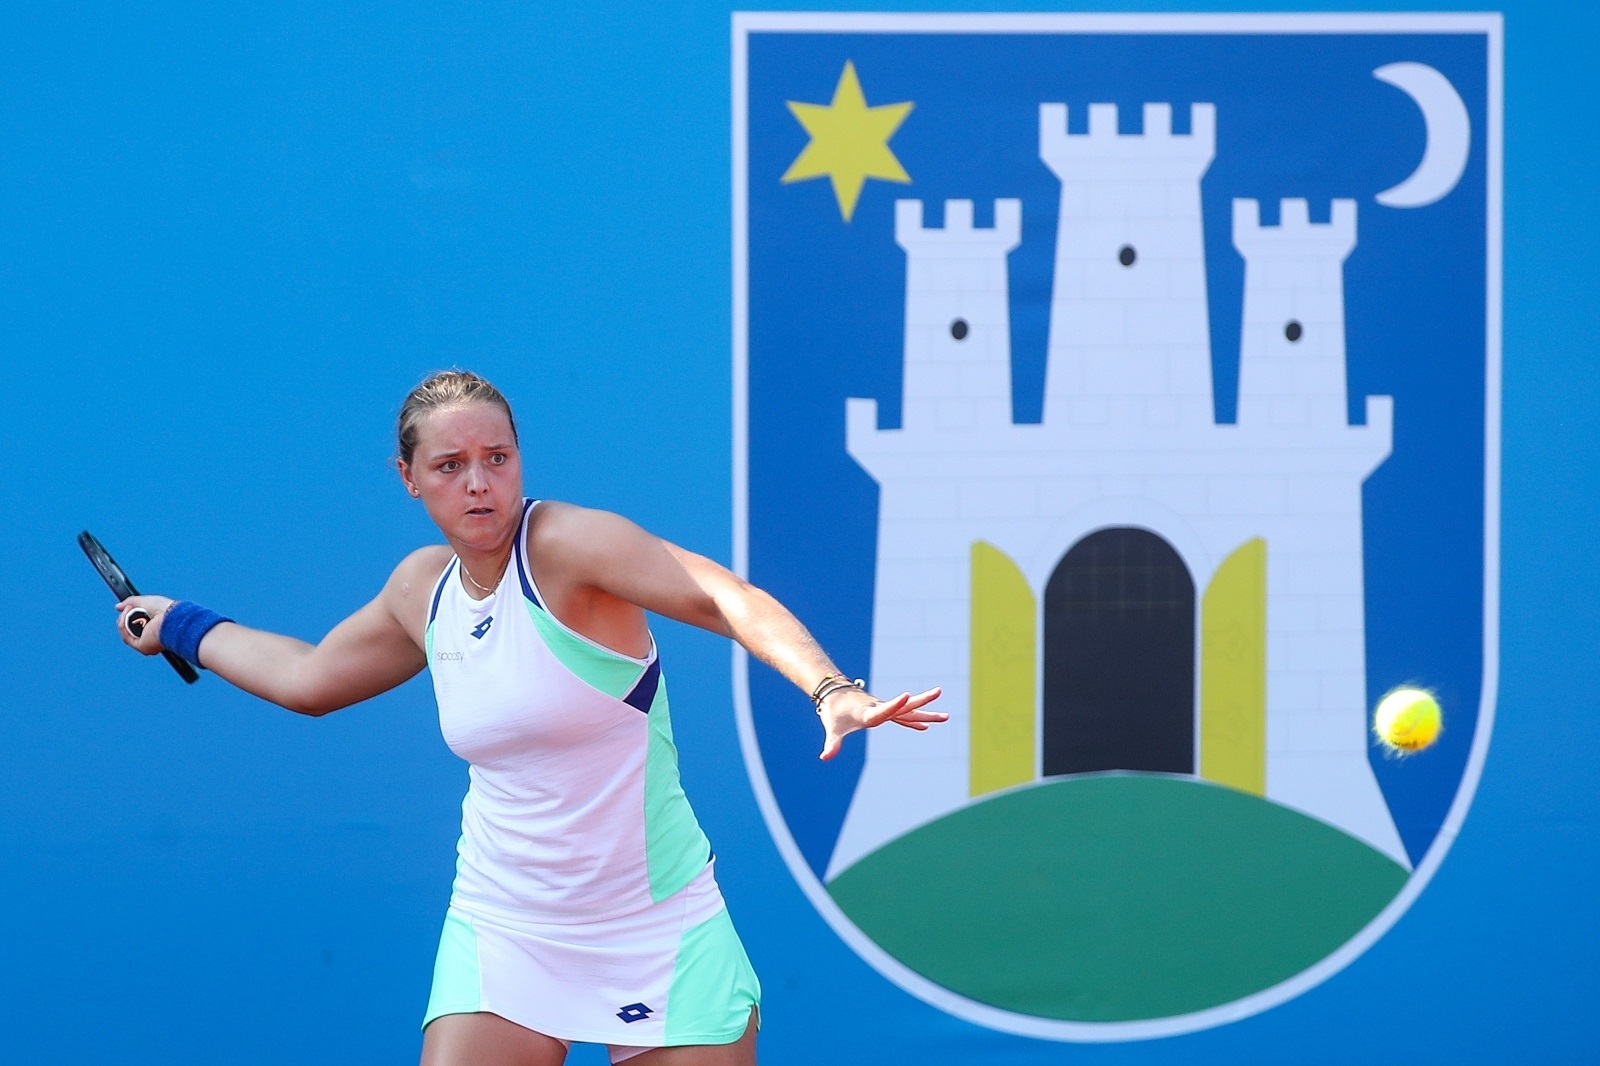 15.09.2020., Zagreb - Teniski centar Maksimir, ITF Zagreb Ladies Open: Ana Konjuh CRO - Jule Niemeier GER. 
Photo: Goran Stanzl/PIXSELL